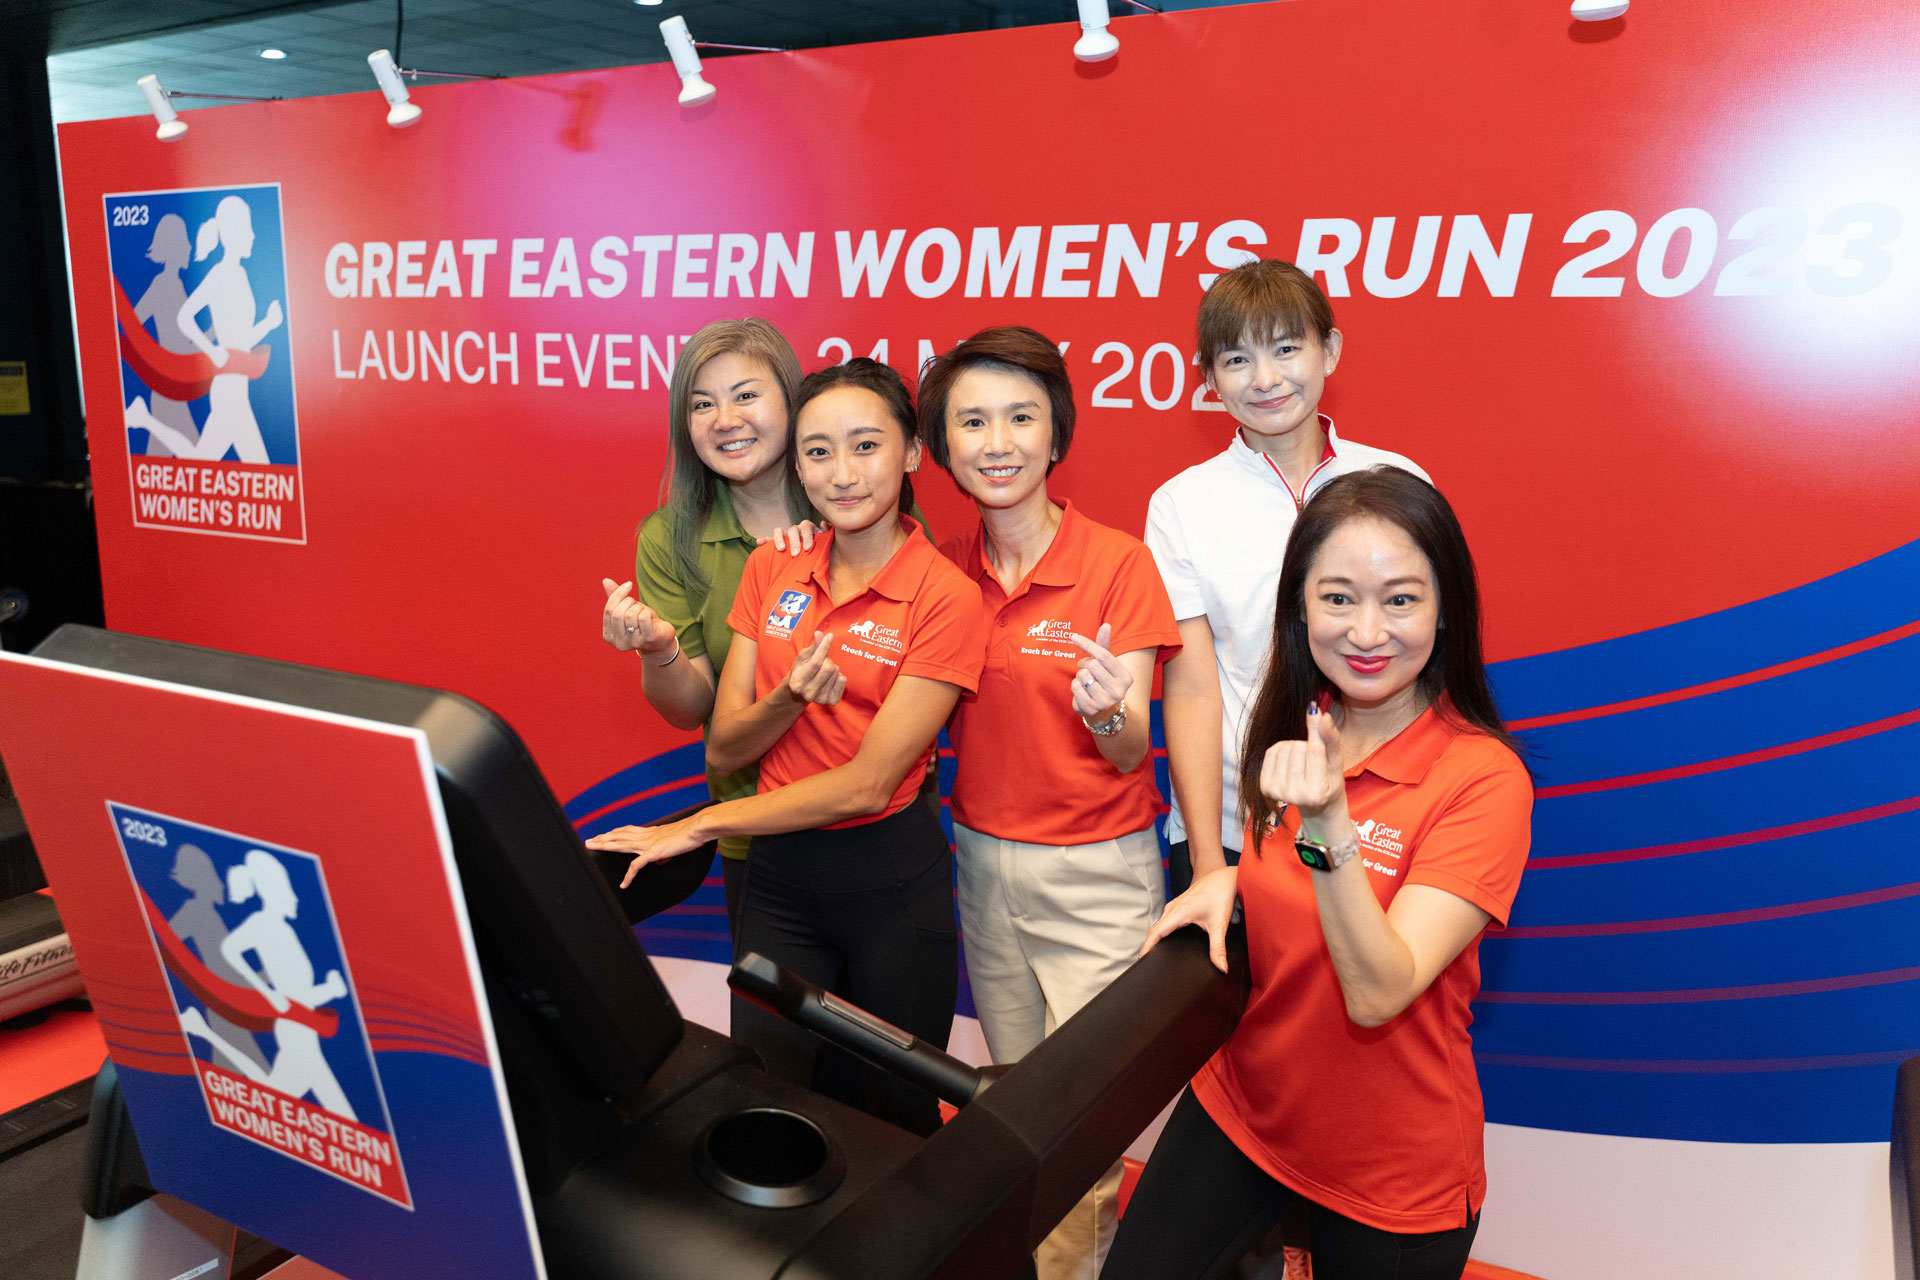 Choo Ling Er, Great Eastern Women's Run participant